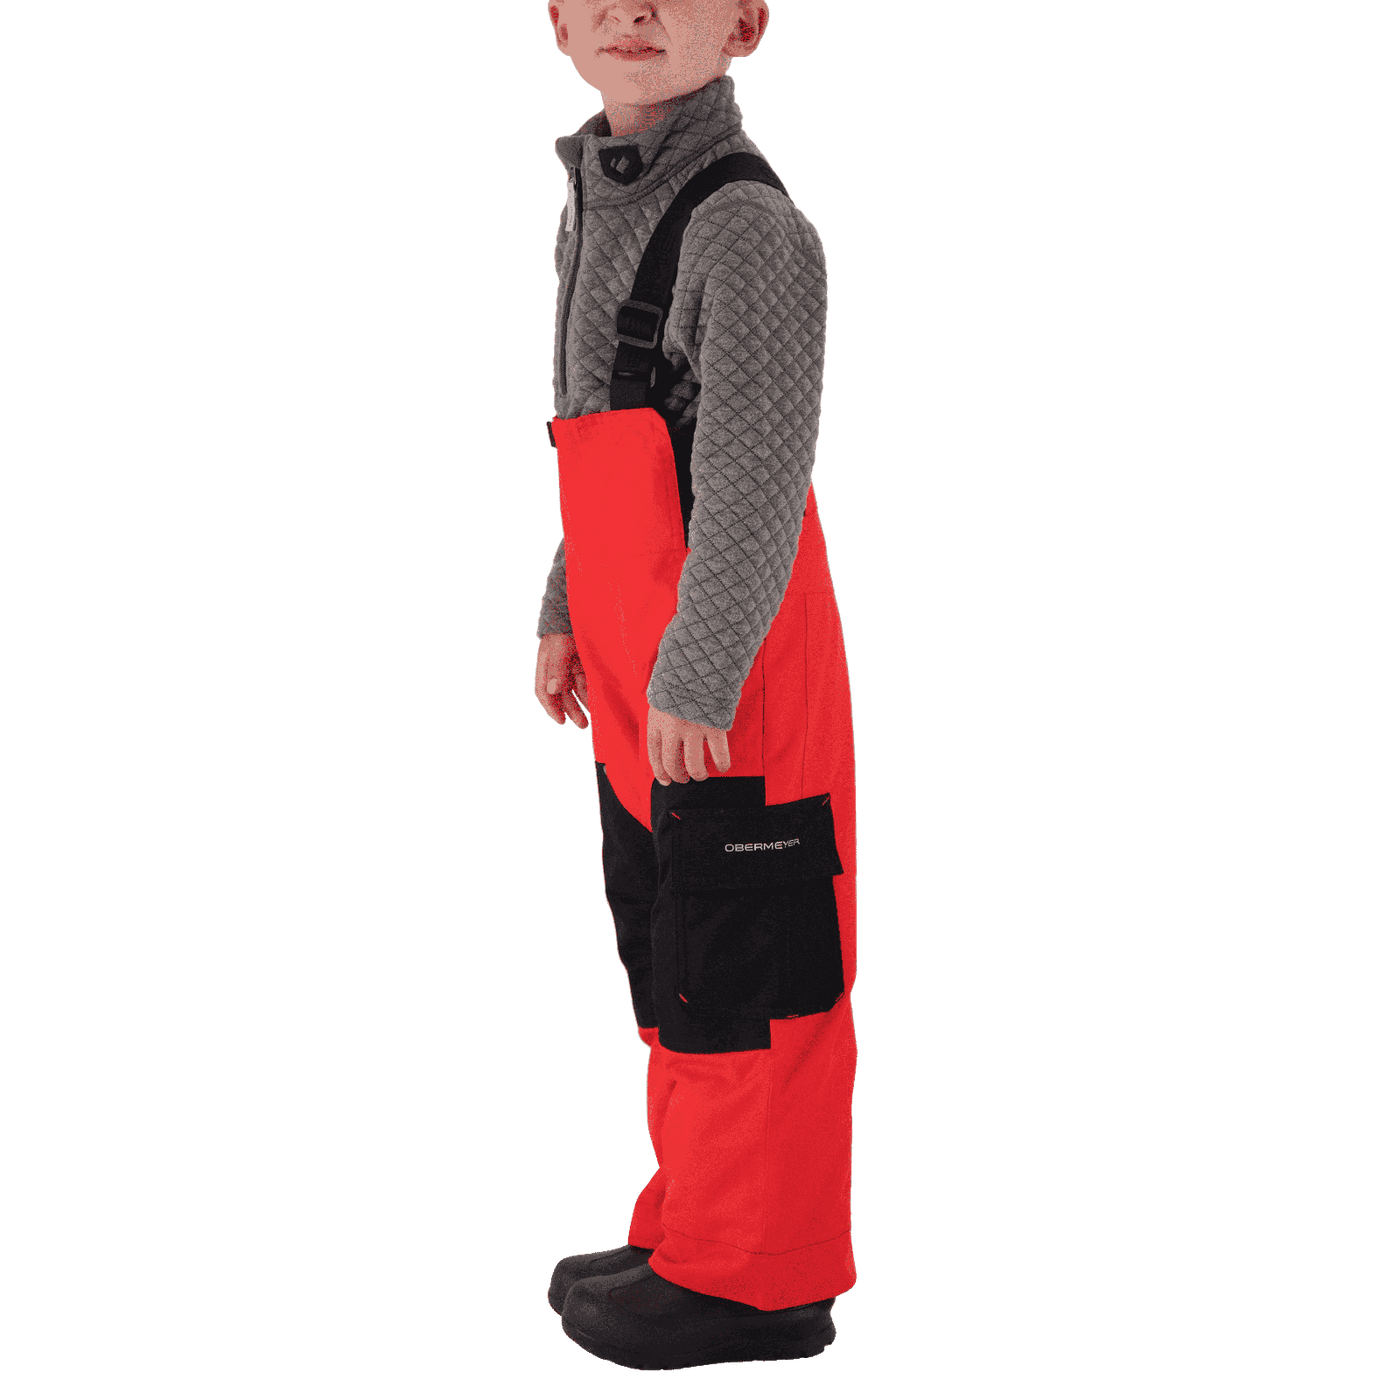 Obermeyer Outerwear Pants Obermeyer Boys Volt Snow Pants - Red